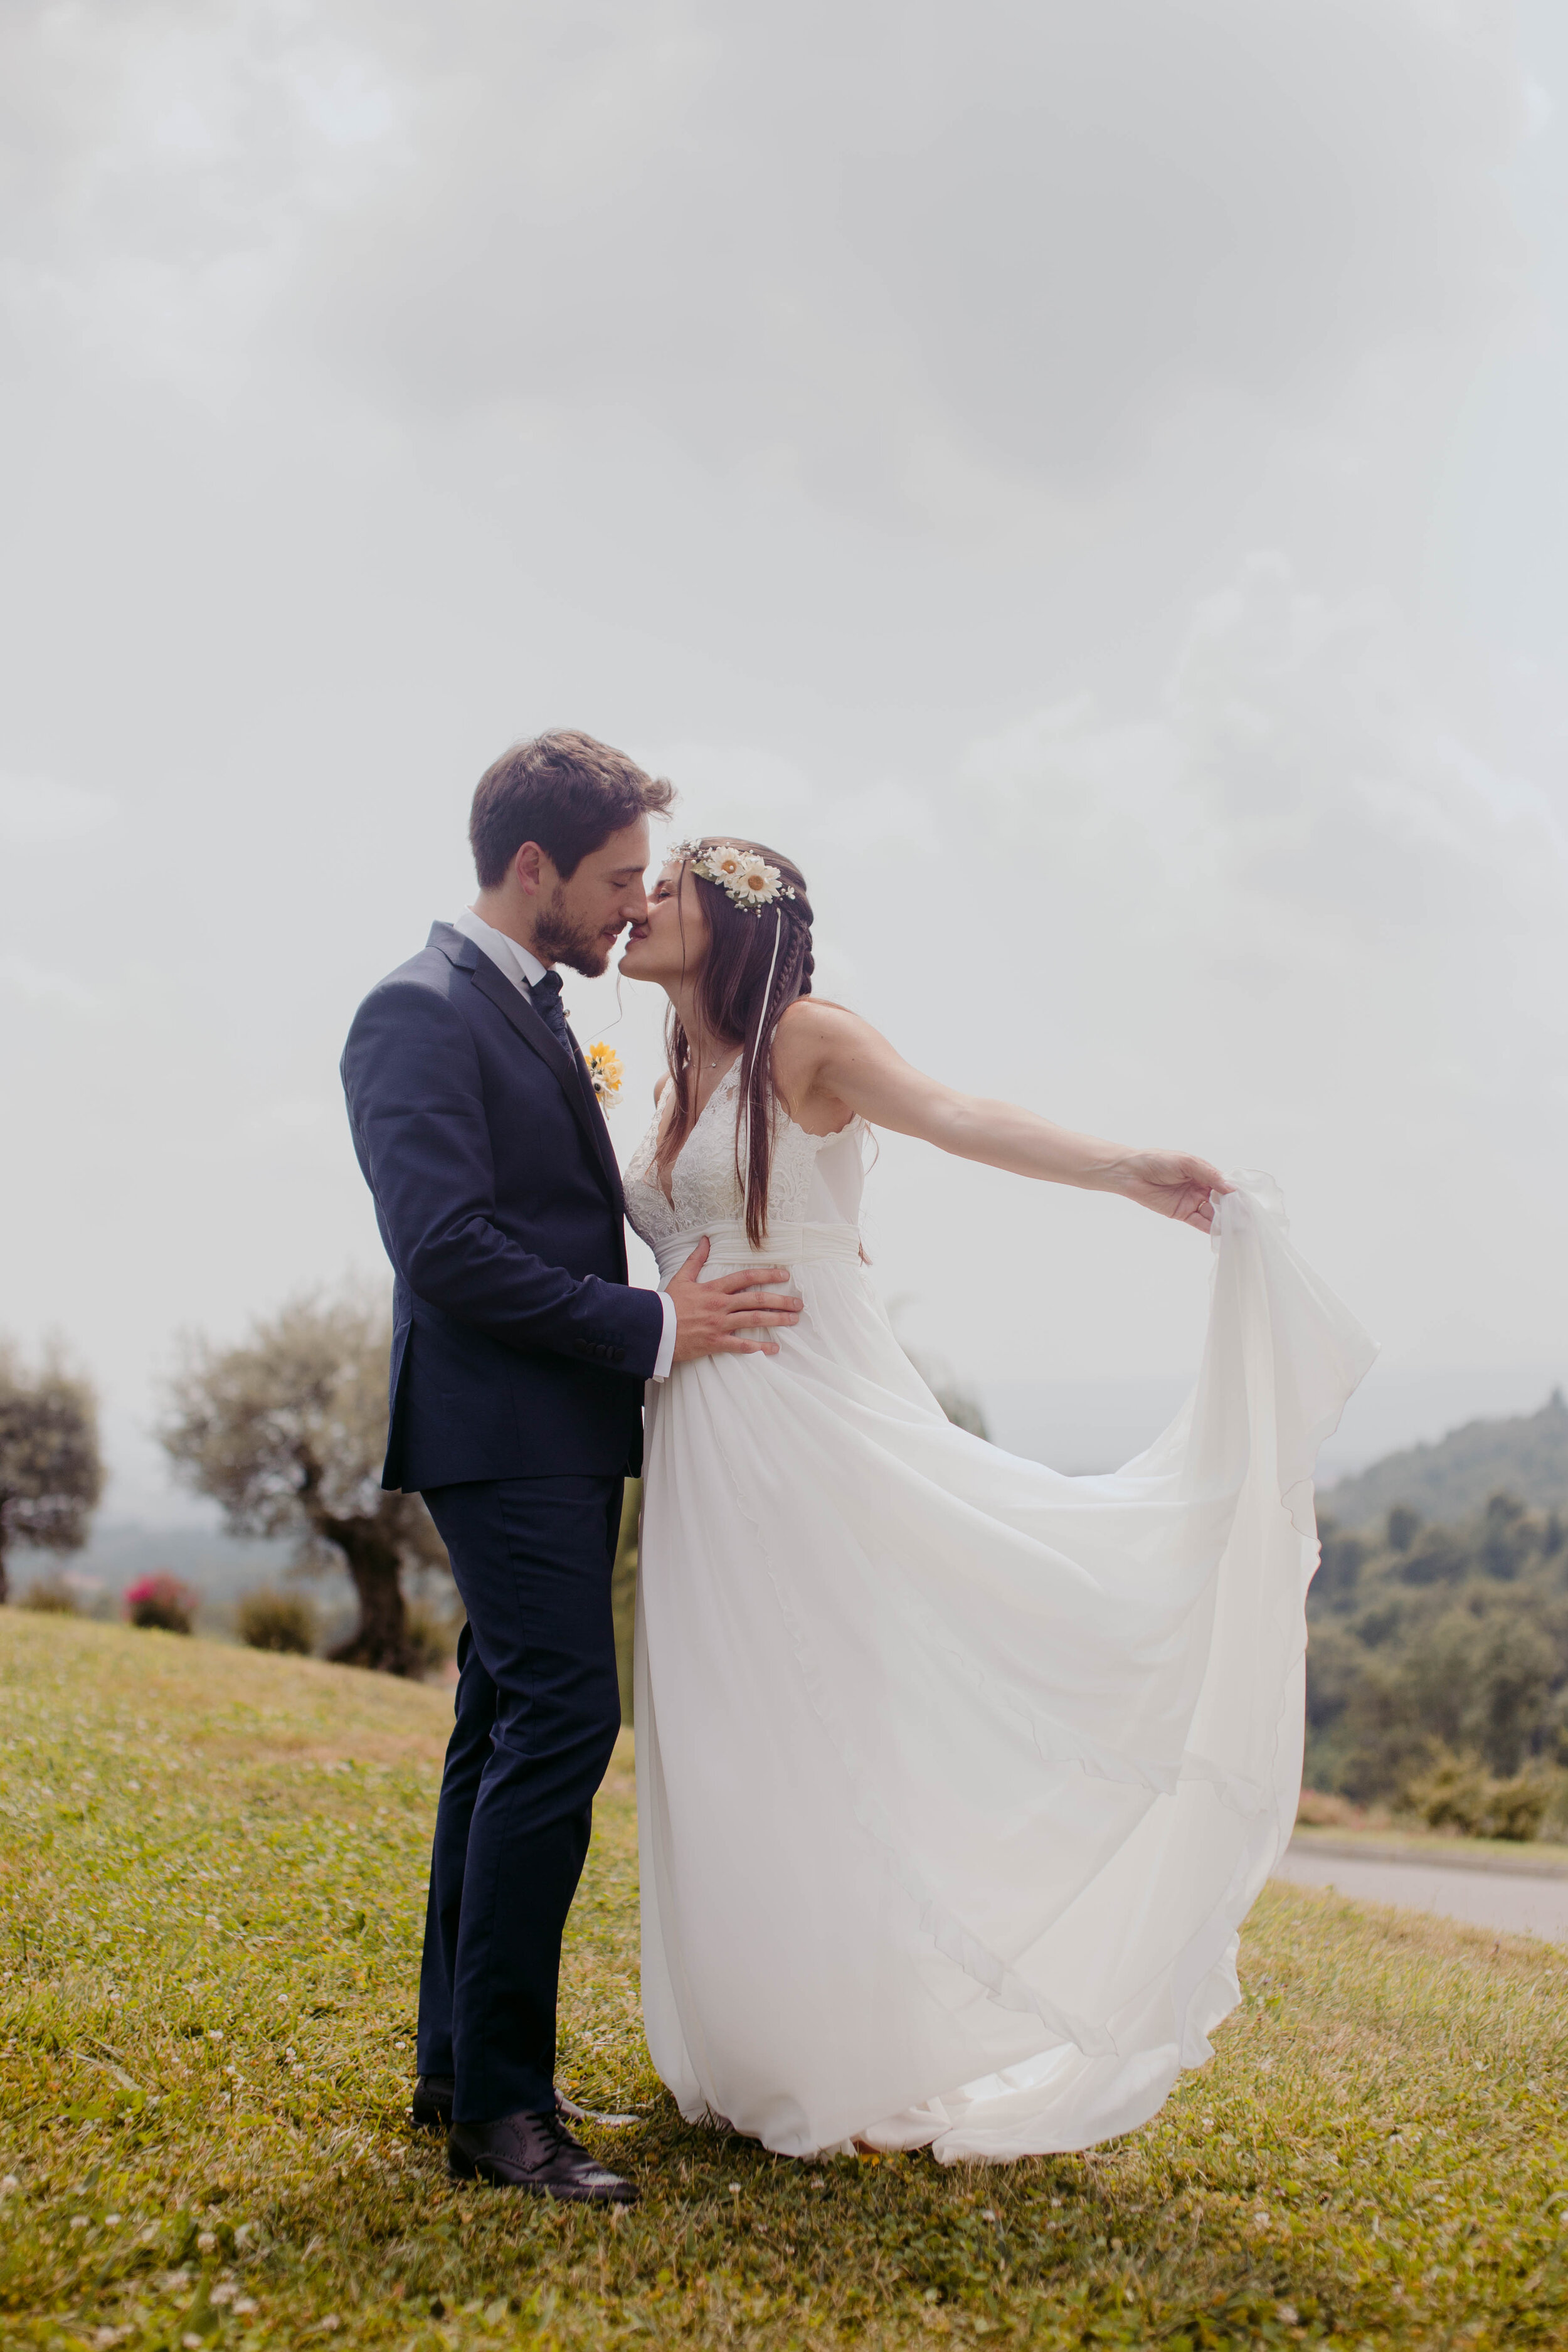 046 - Matrimonio a Cascina Rovet - Biella - Miriam Callegari Fotografa.JPG